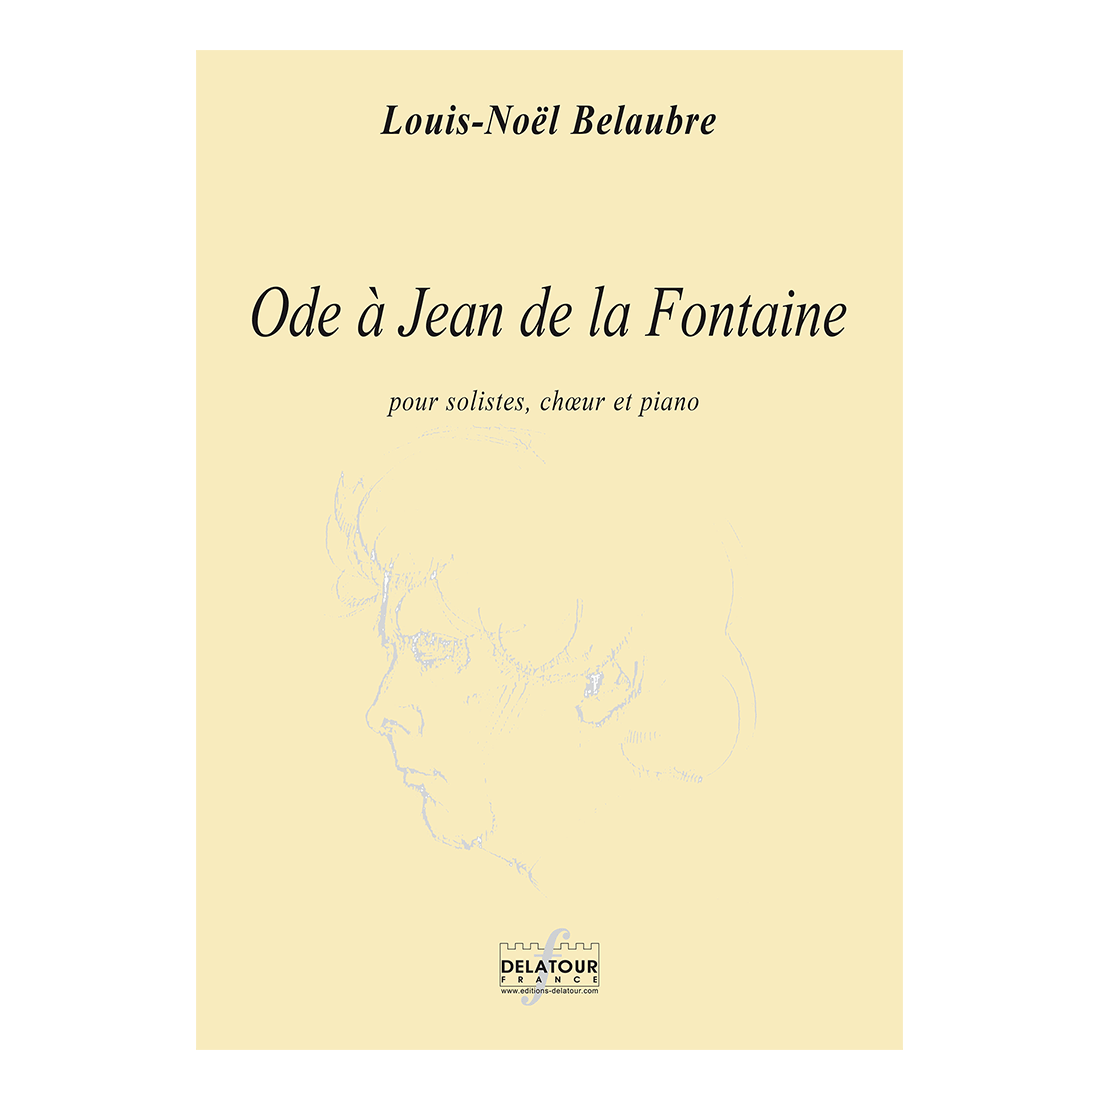 Ode à Jean de la Fontaine for soloists, choir and piano (PIANO-VOCAL)